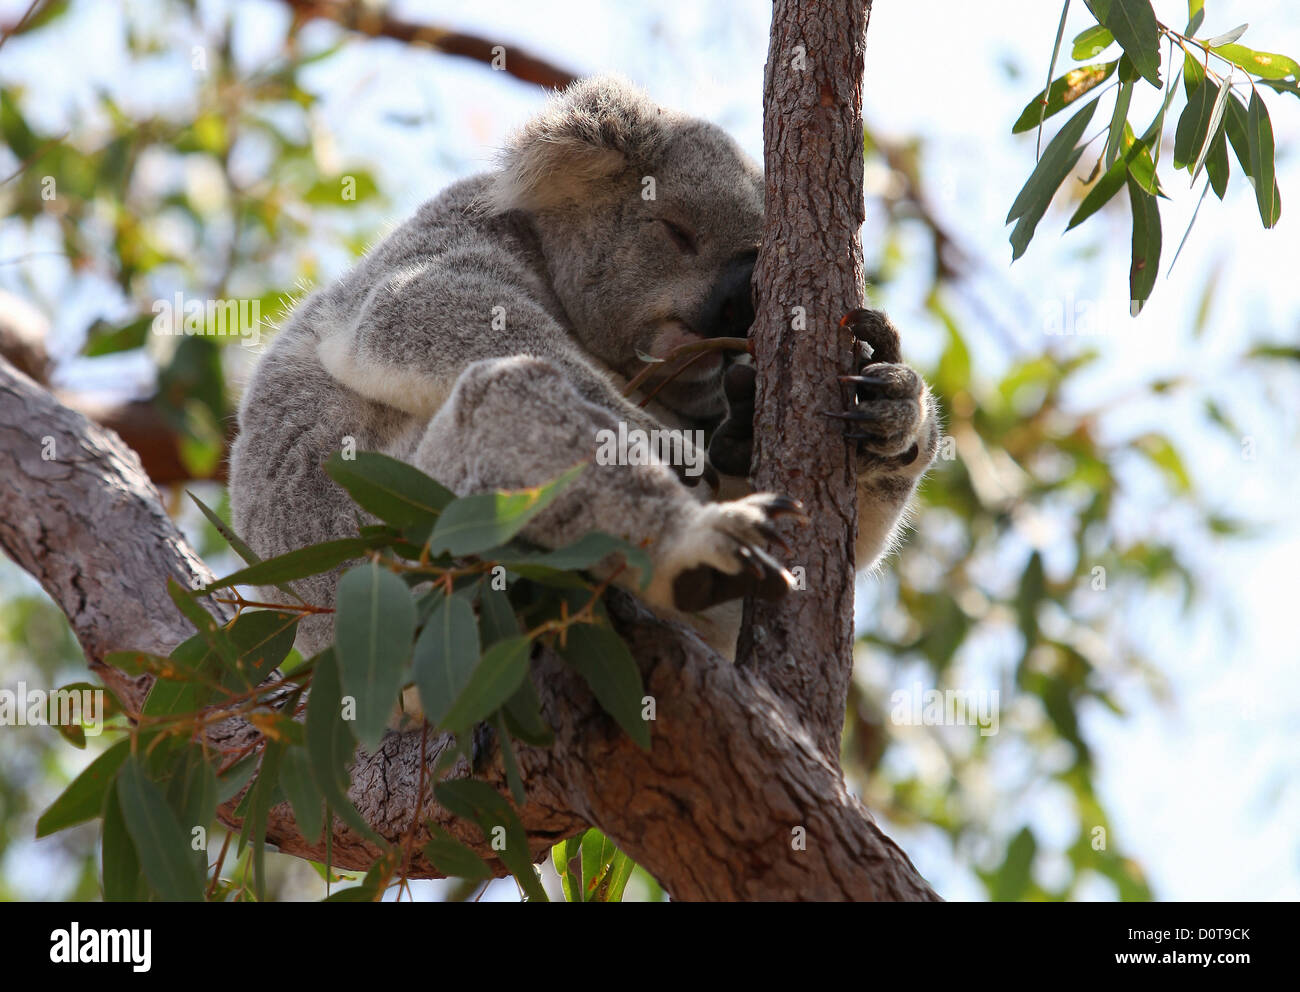 Koala, marsupial, typical, sleep, eucalyptus, karri, tree, branch, knot, leaves, foliage, sweetly, sweetly, fur, Magnetic Island Stock Photo